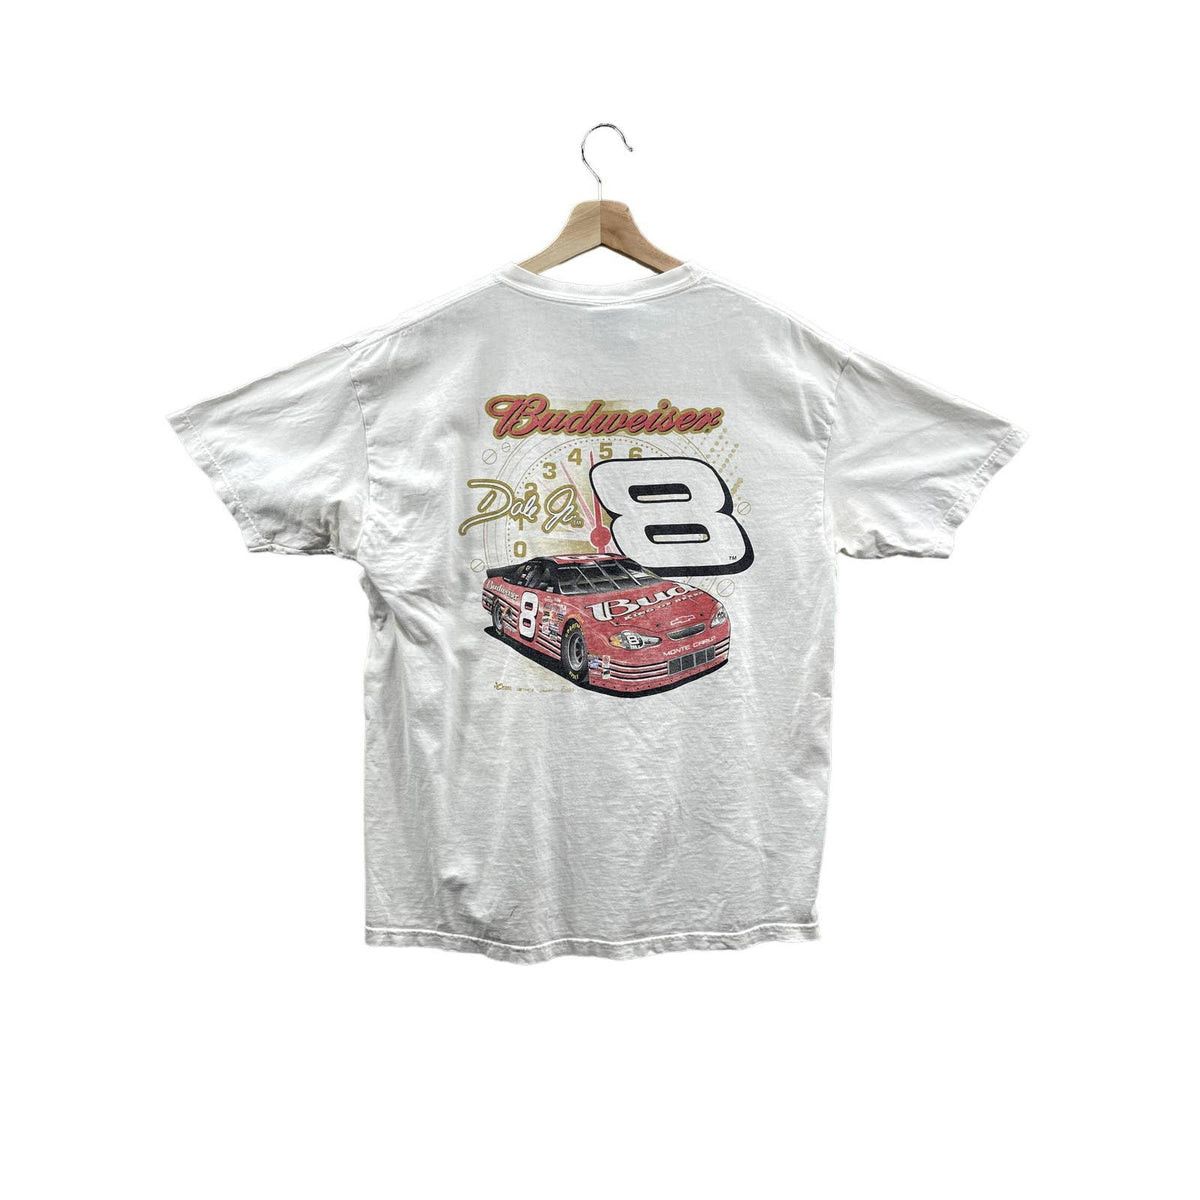 Vintage 2000's Chase Authentics Dale Earnhardt Jr Nascar Racing Pocket T-Shirt